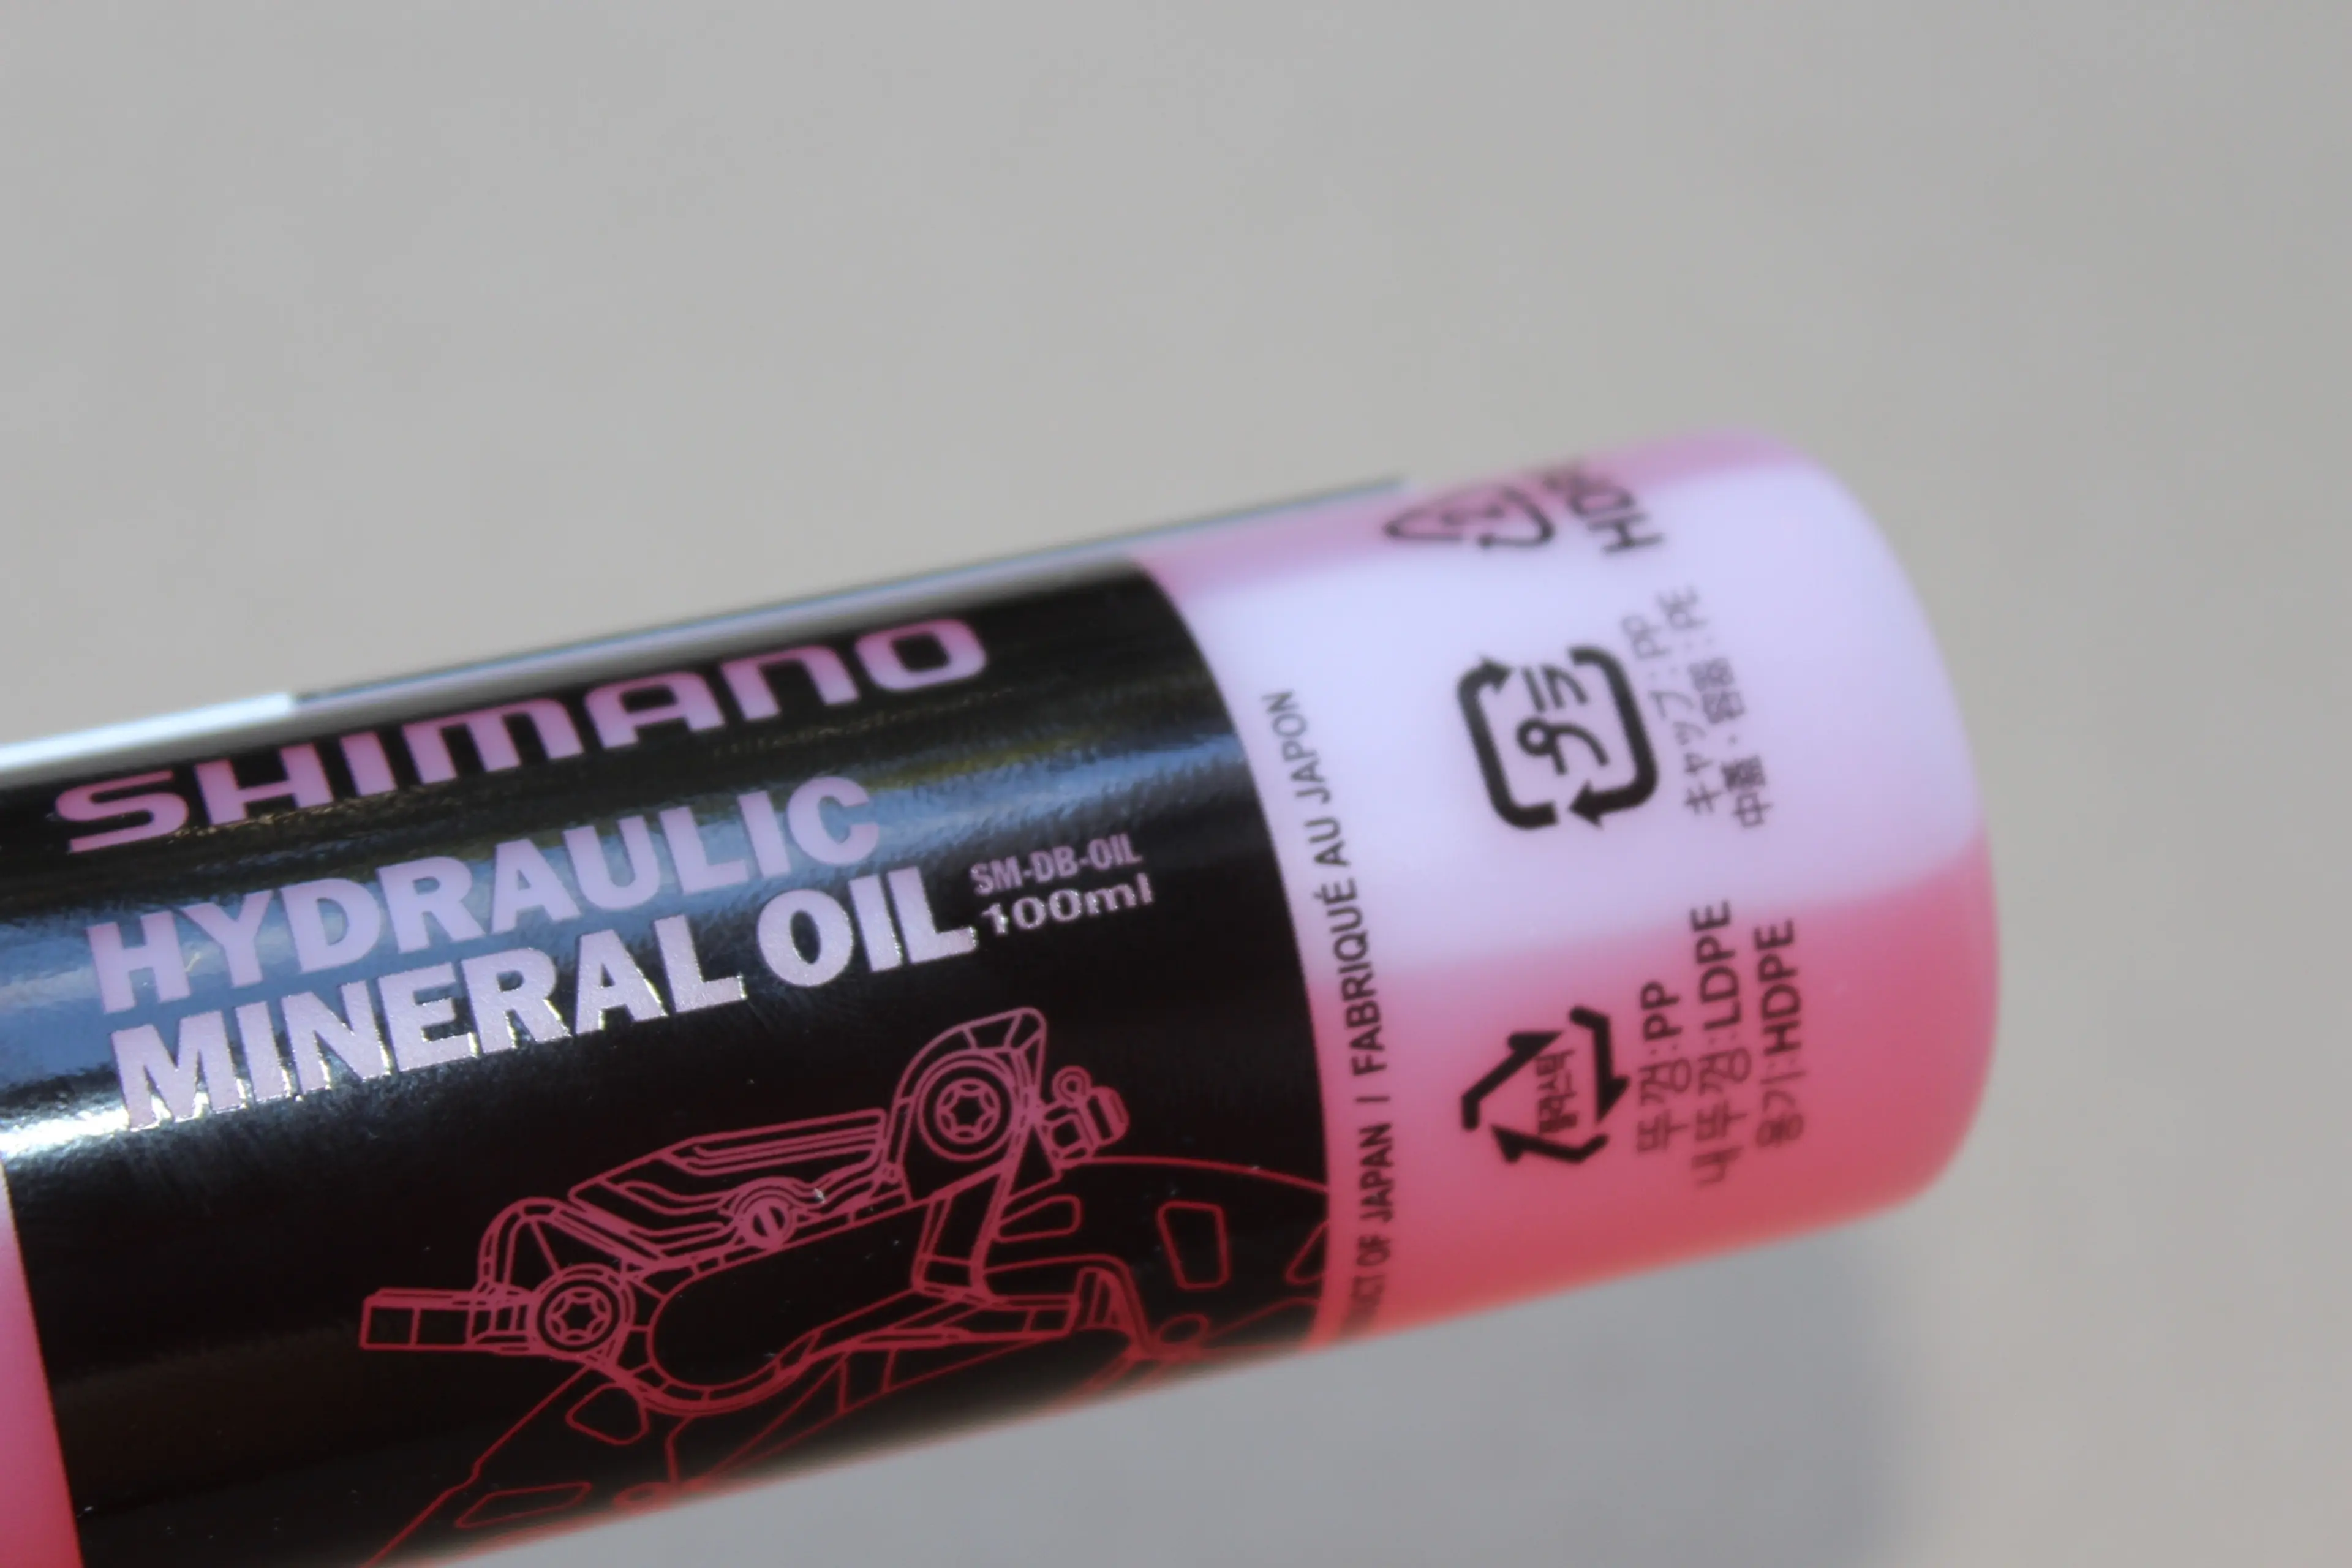 3. Shimano mineral oil SM-DB - 100ml